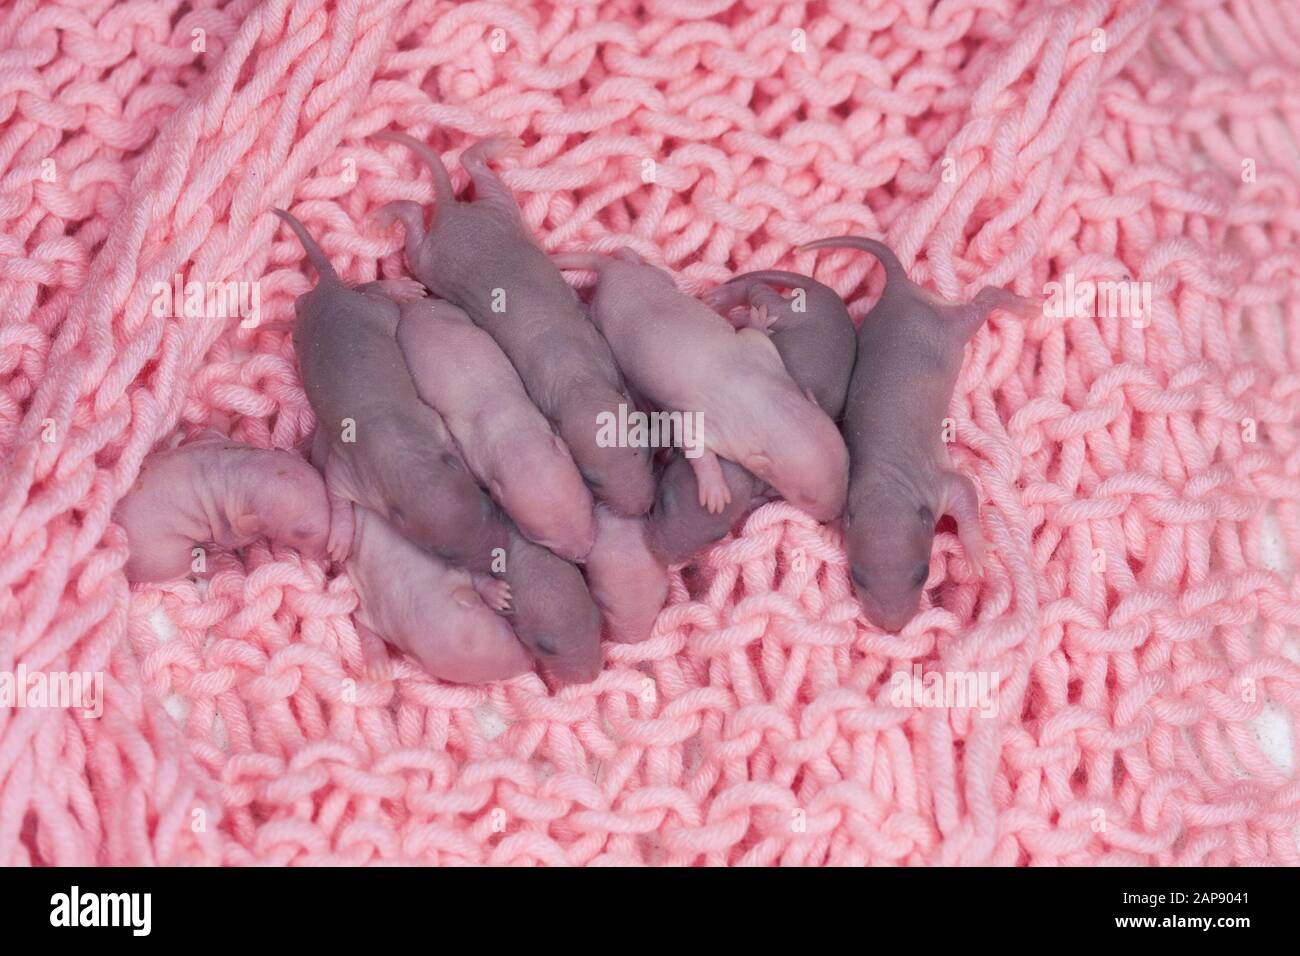 Newborn Rats On Pink Baby Cloth Symbol Of Chinese Horoscope Stock Photo Alamy